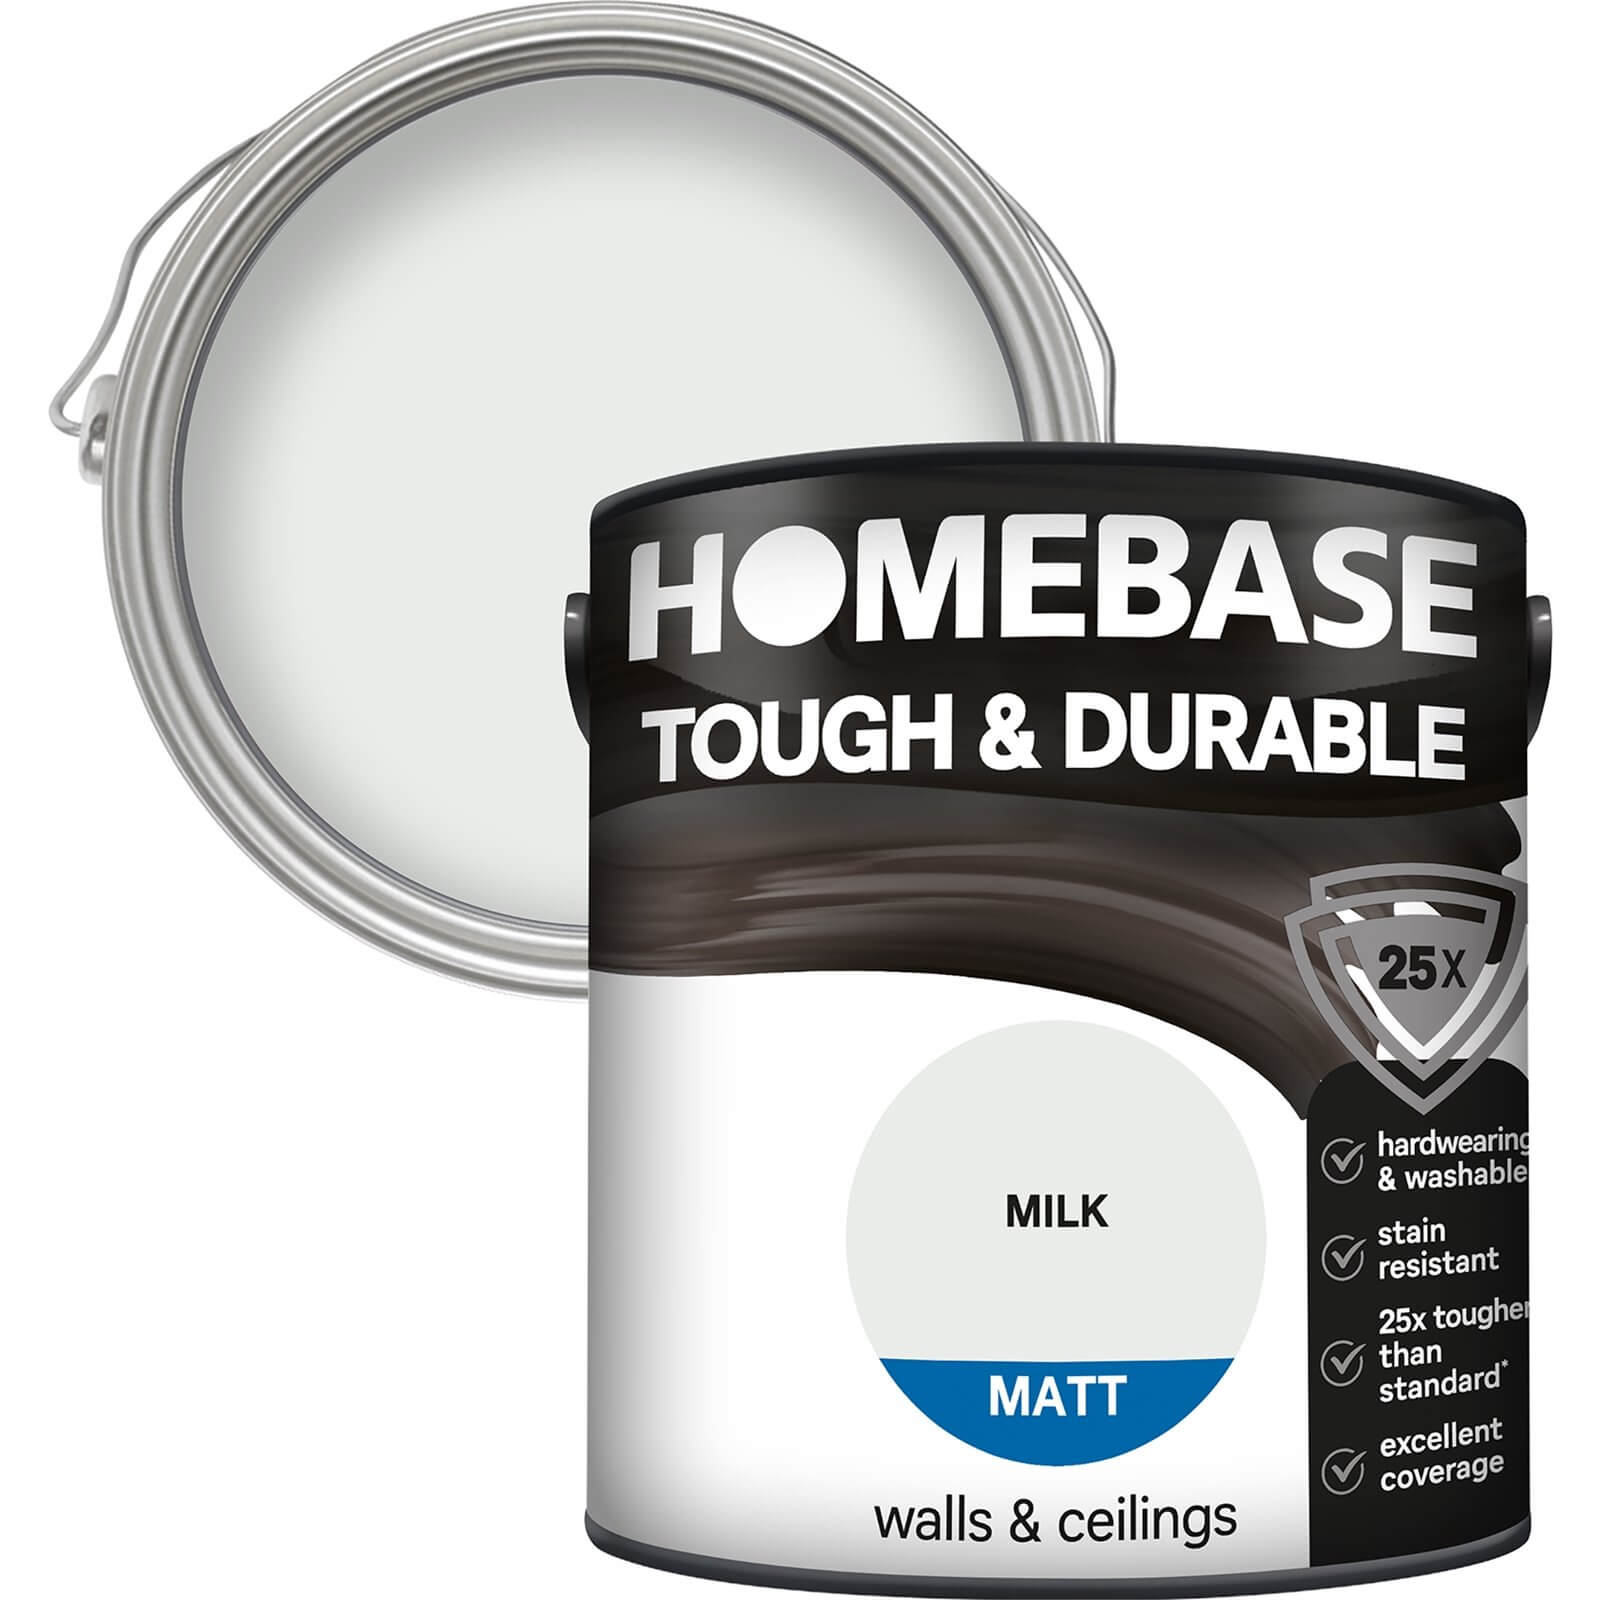 Photo of Homebase Tough & Durable Matt Paint - Milk 2.5l